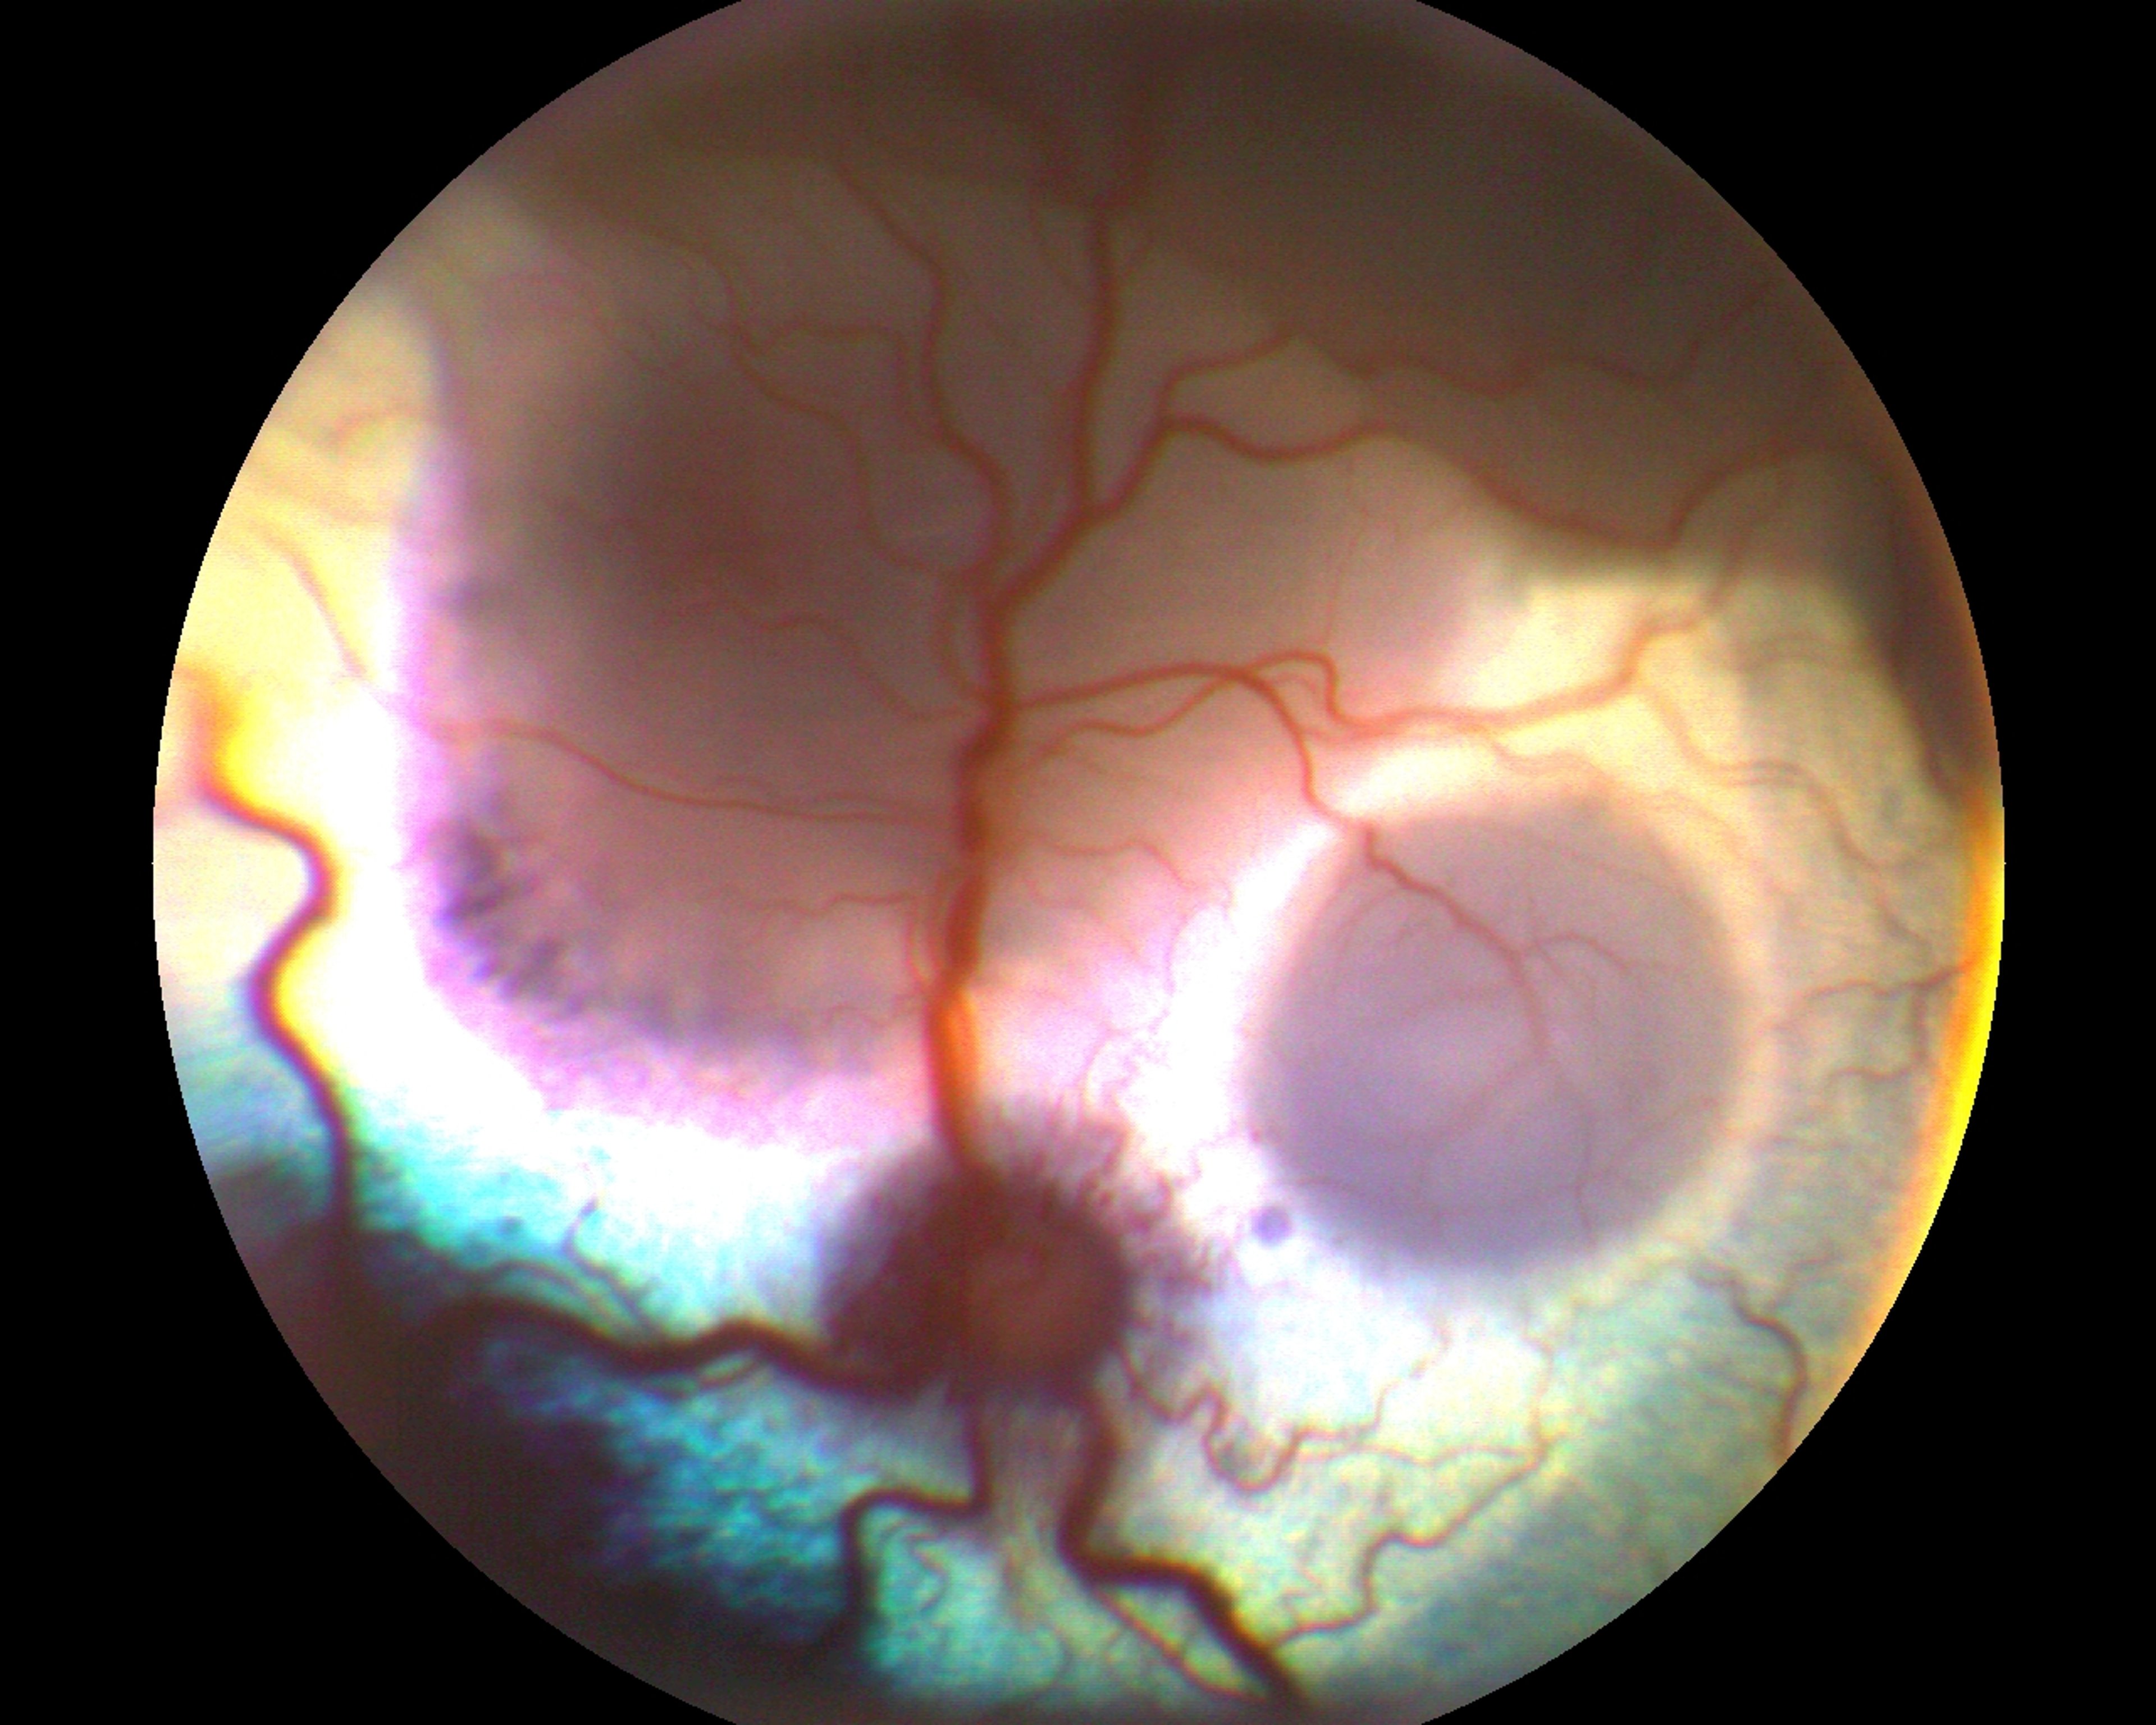 Multifocal retinal detachments, cat